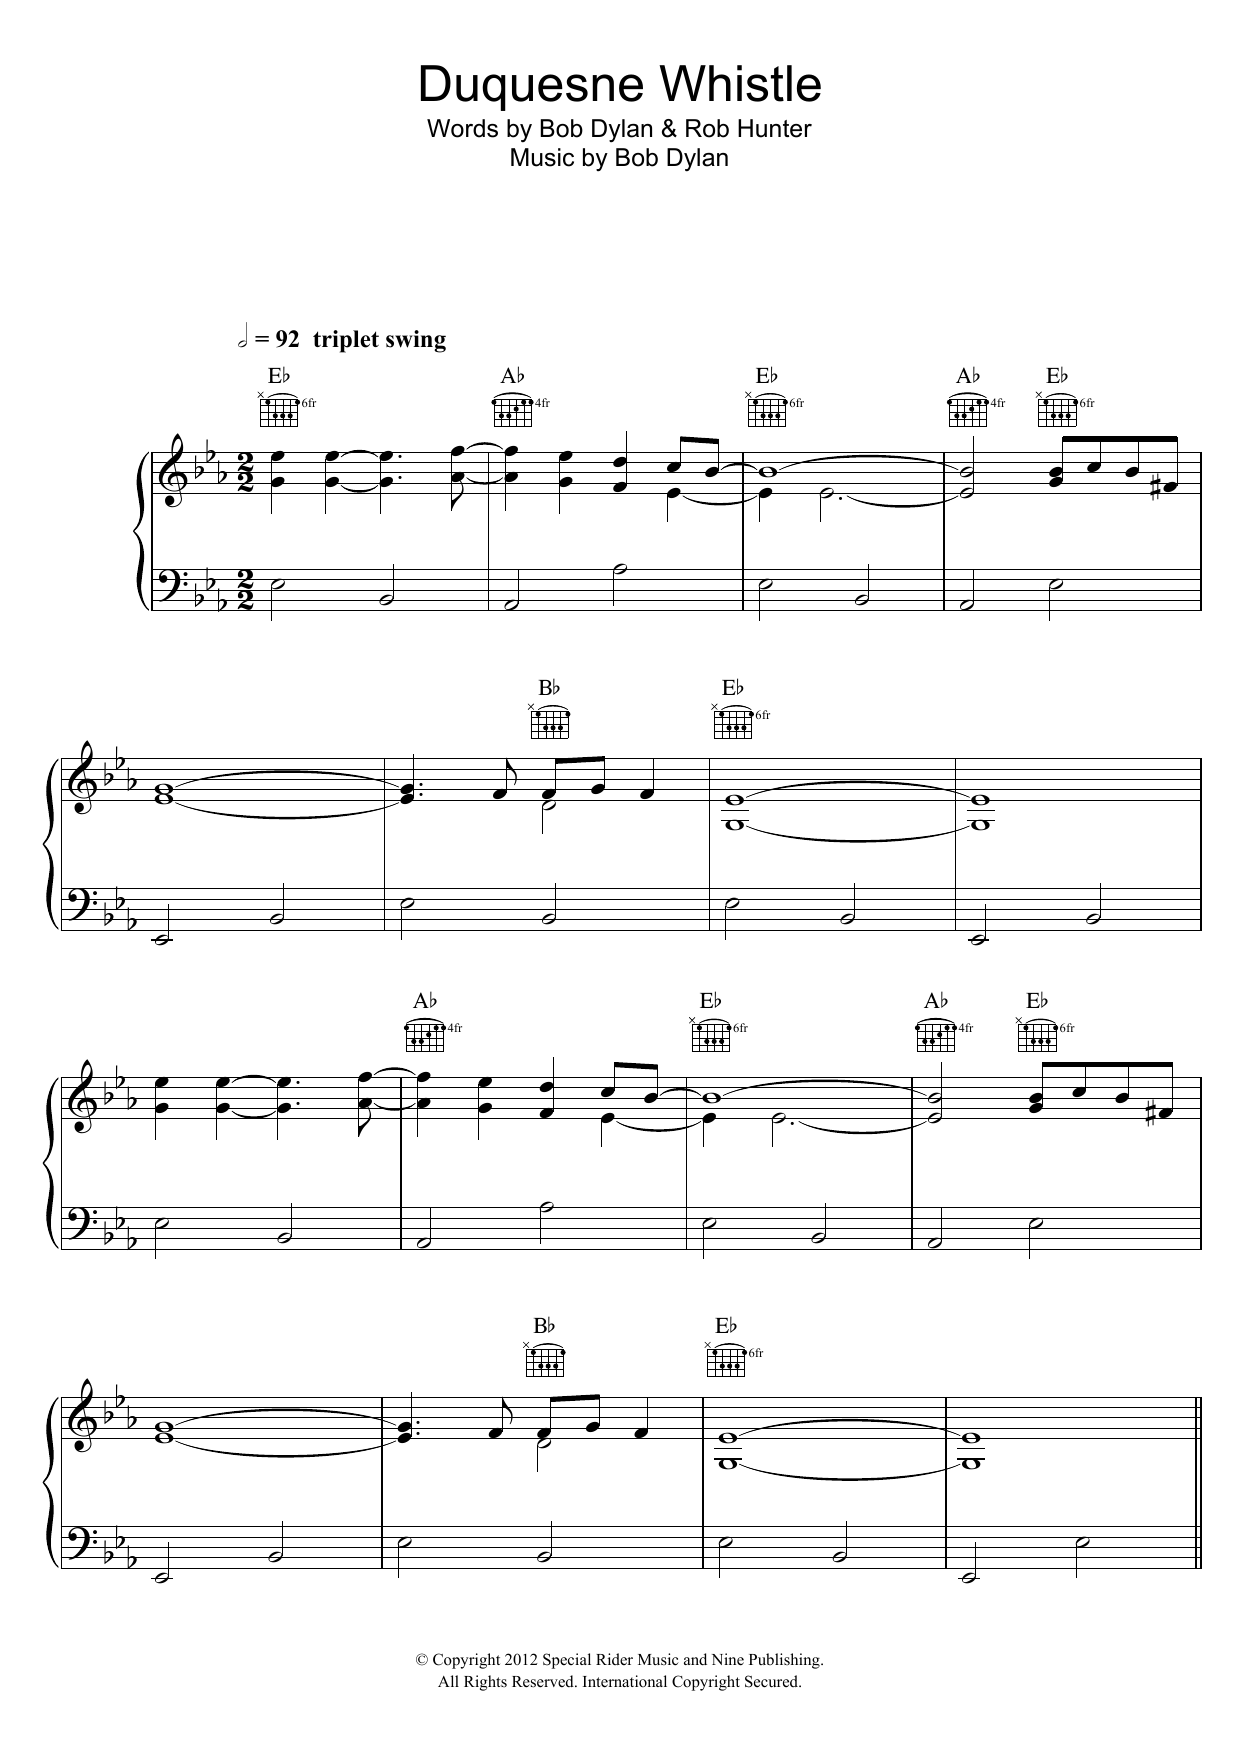 Bob Dylan Duquesne Whistle Sheet Music Notes & Chords for Ukulele Lyrics & Chords - Download or Print PDF